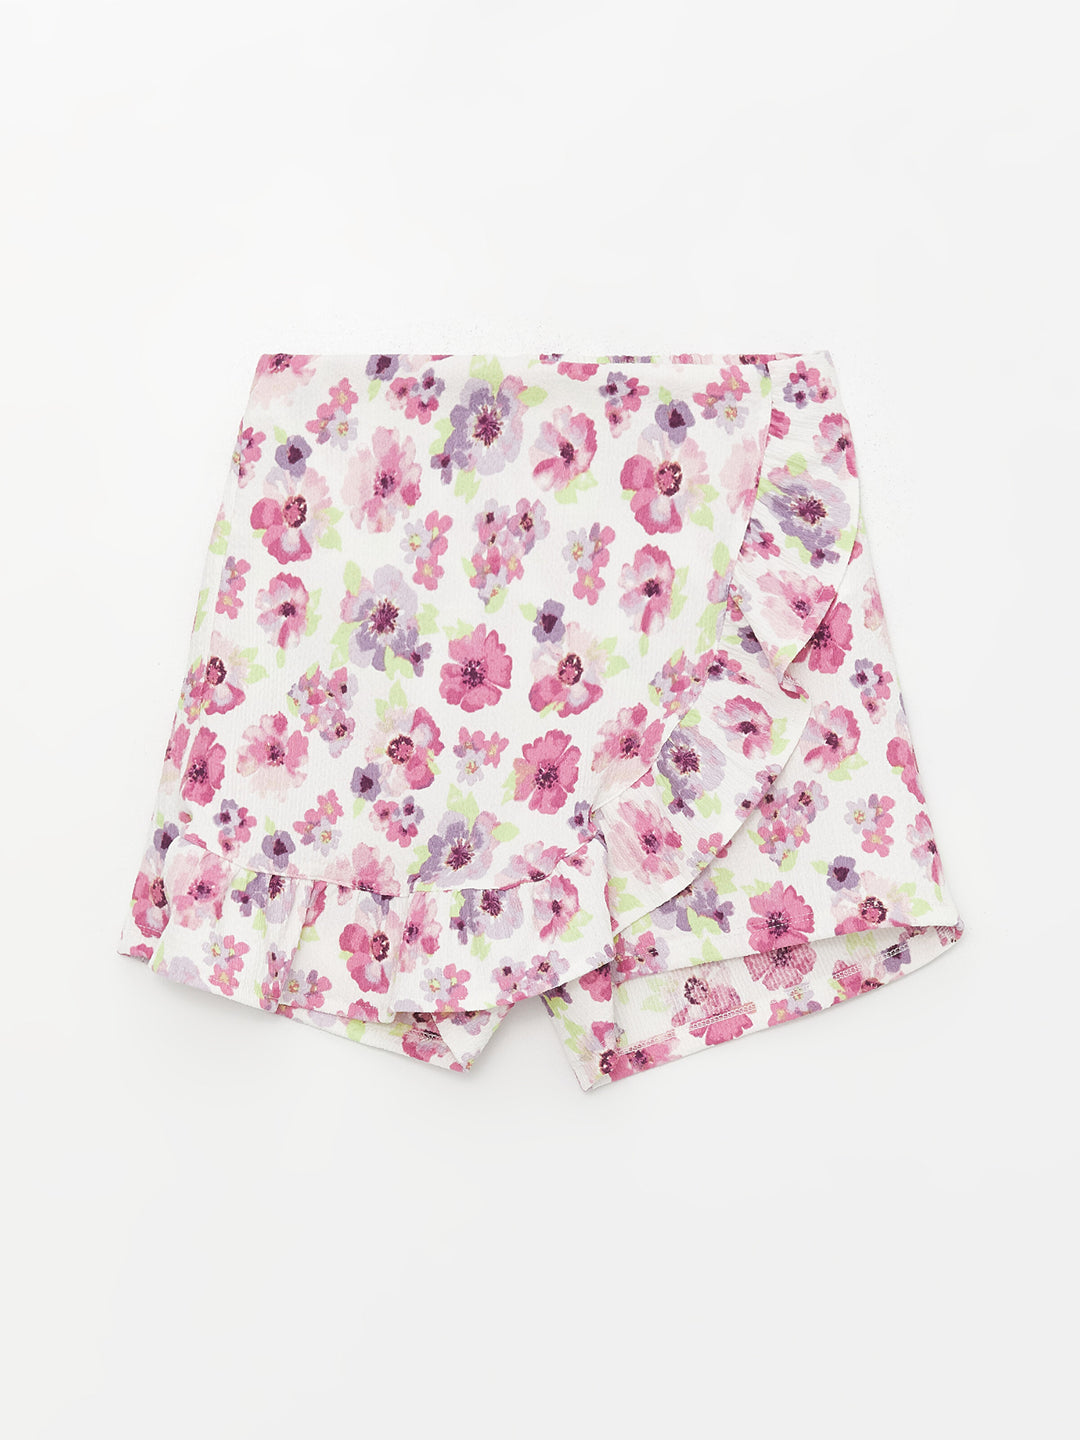 Elastic Waist Floral Girls Shorts Skirt